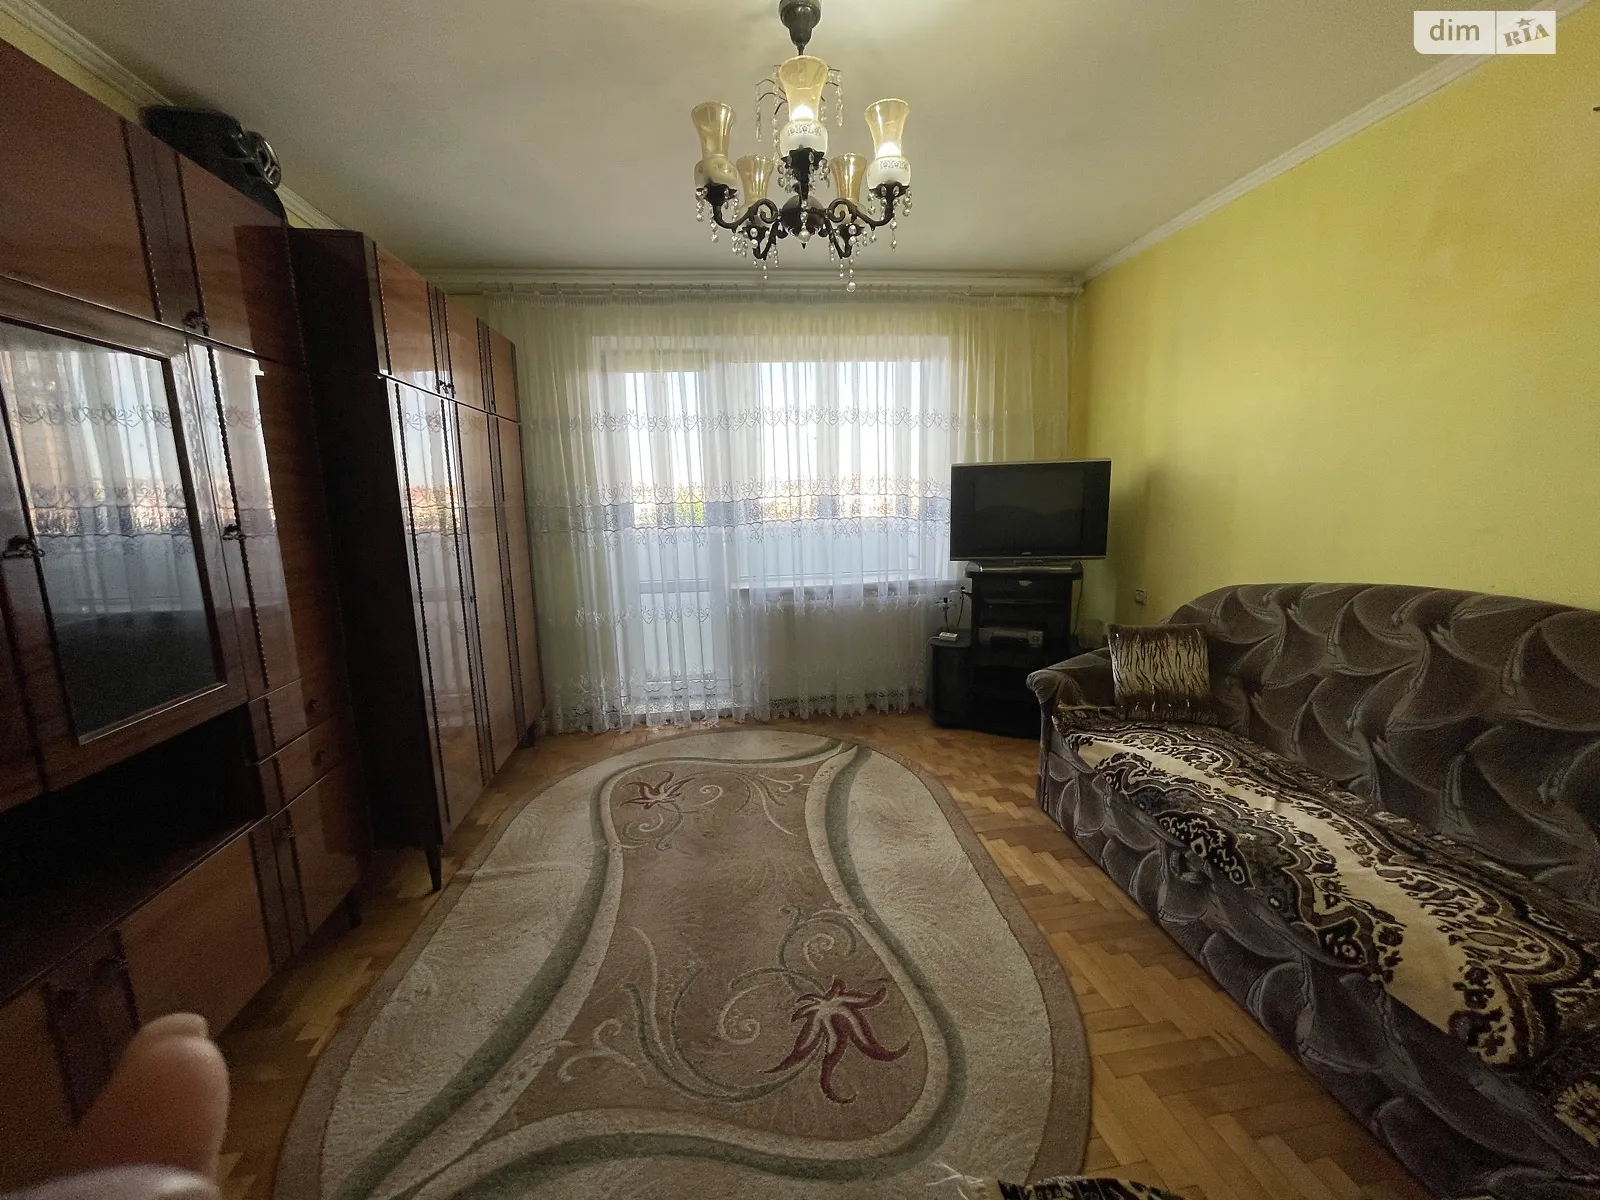 3-кімнатна квартира 64 кв. м у Тернополі, цена: 55000 $ - фото 1